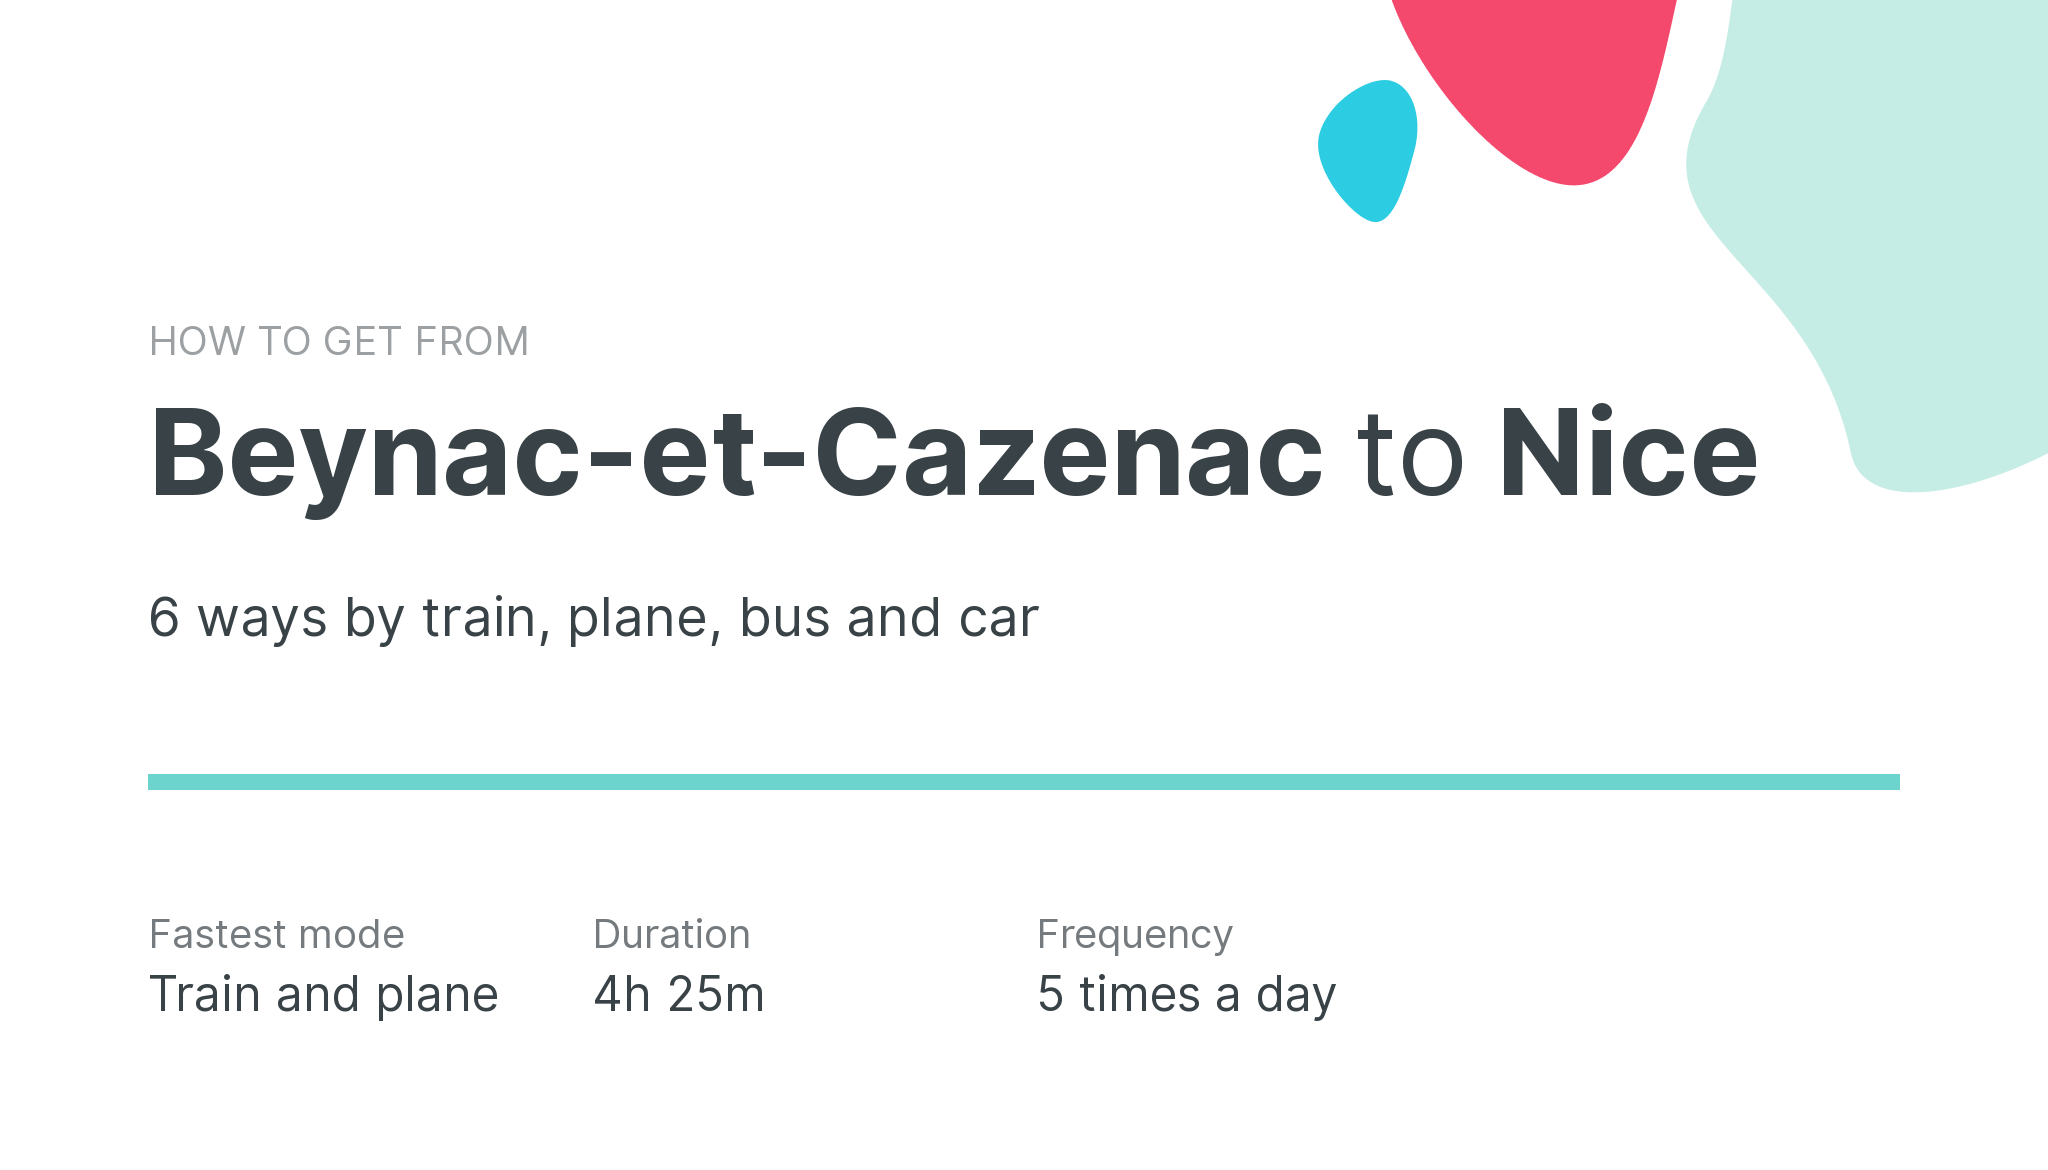 How do I get from Beynac-et-Cazenac to Nice